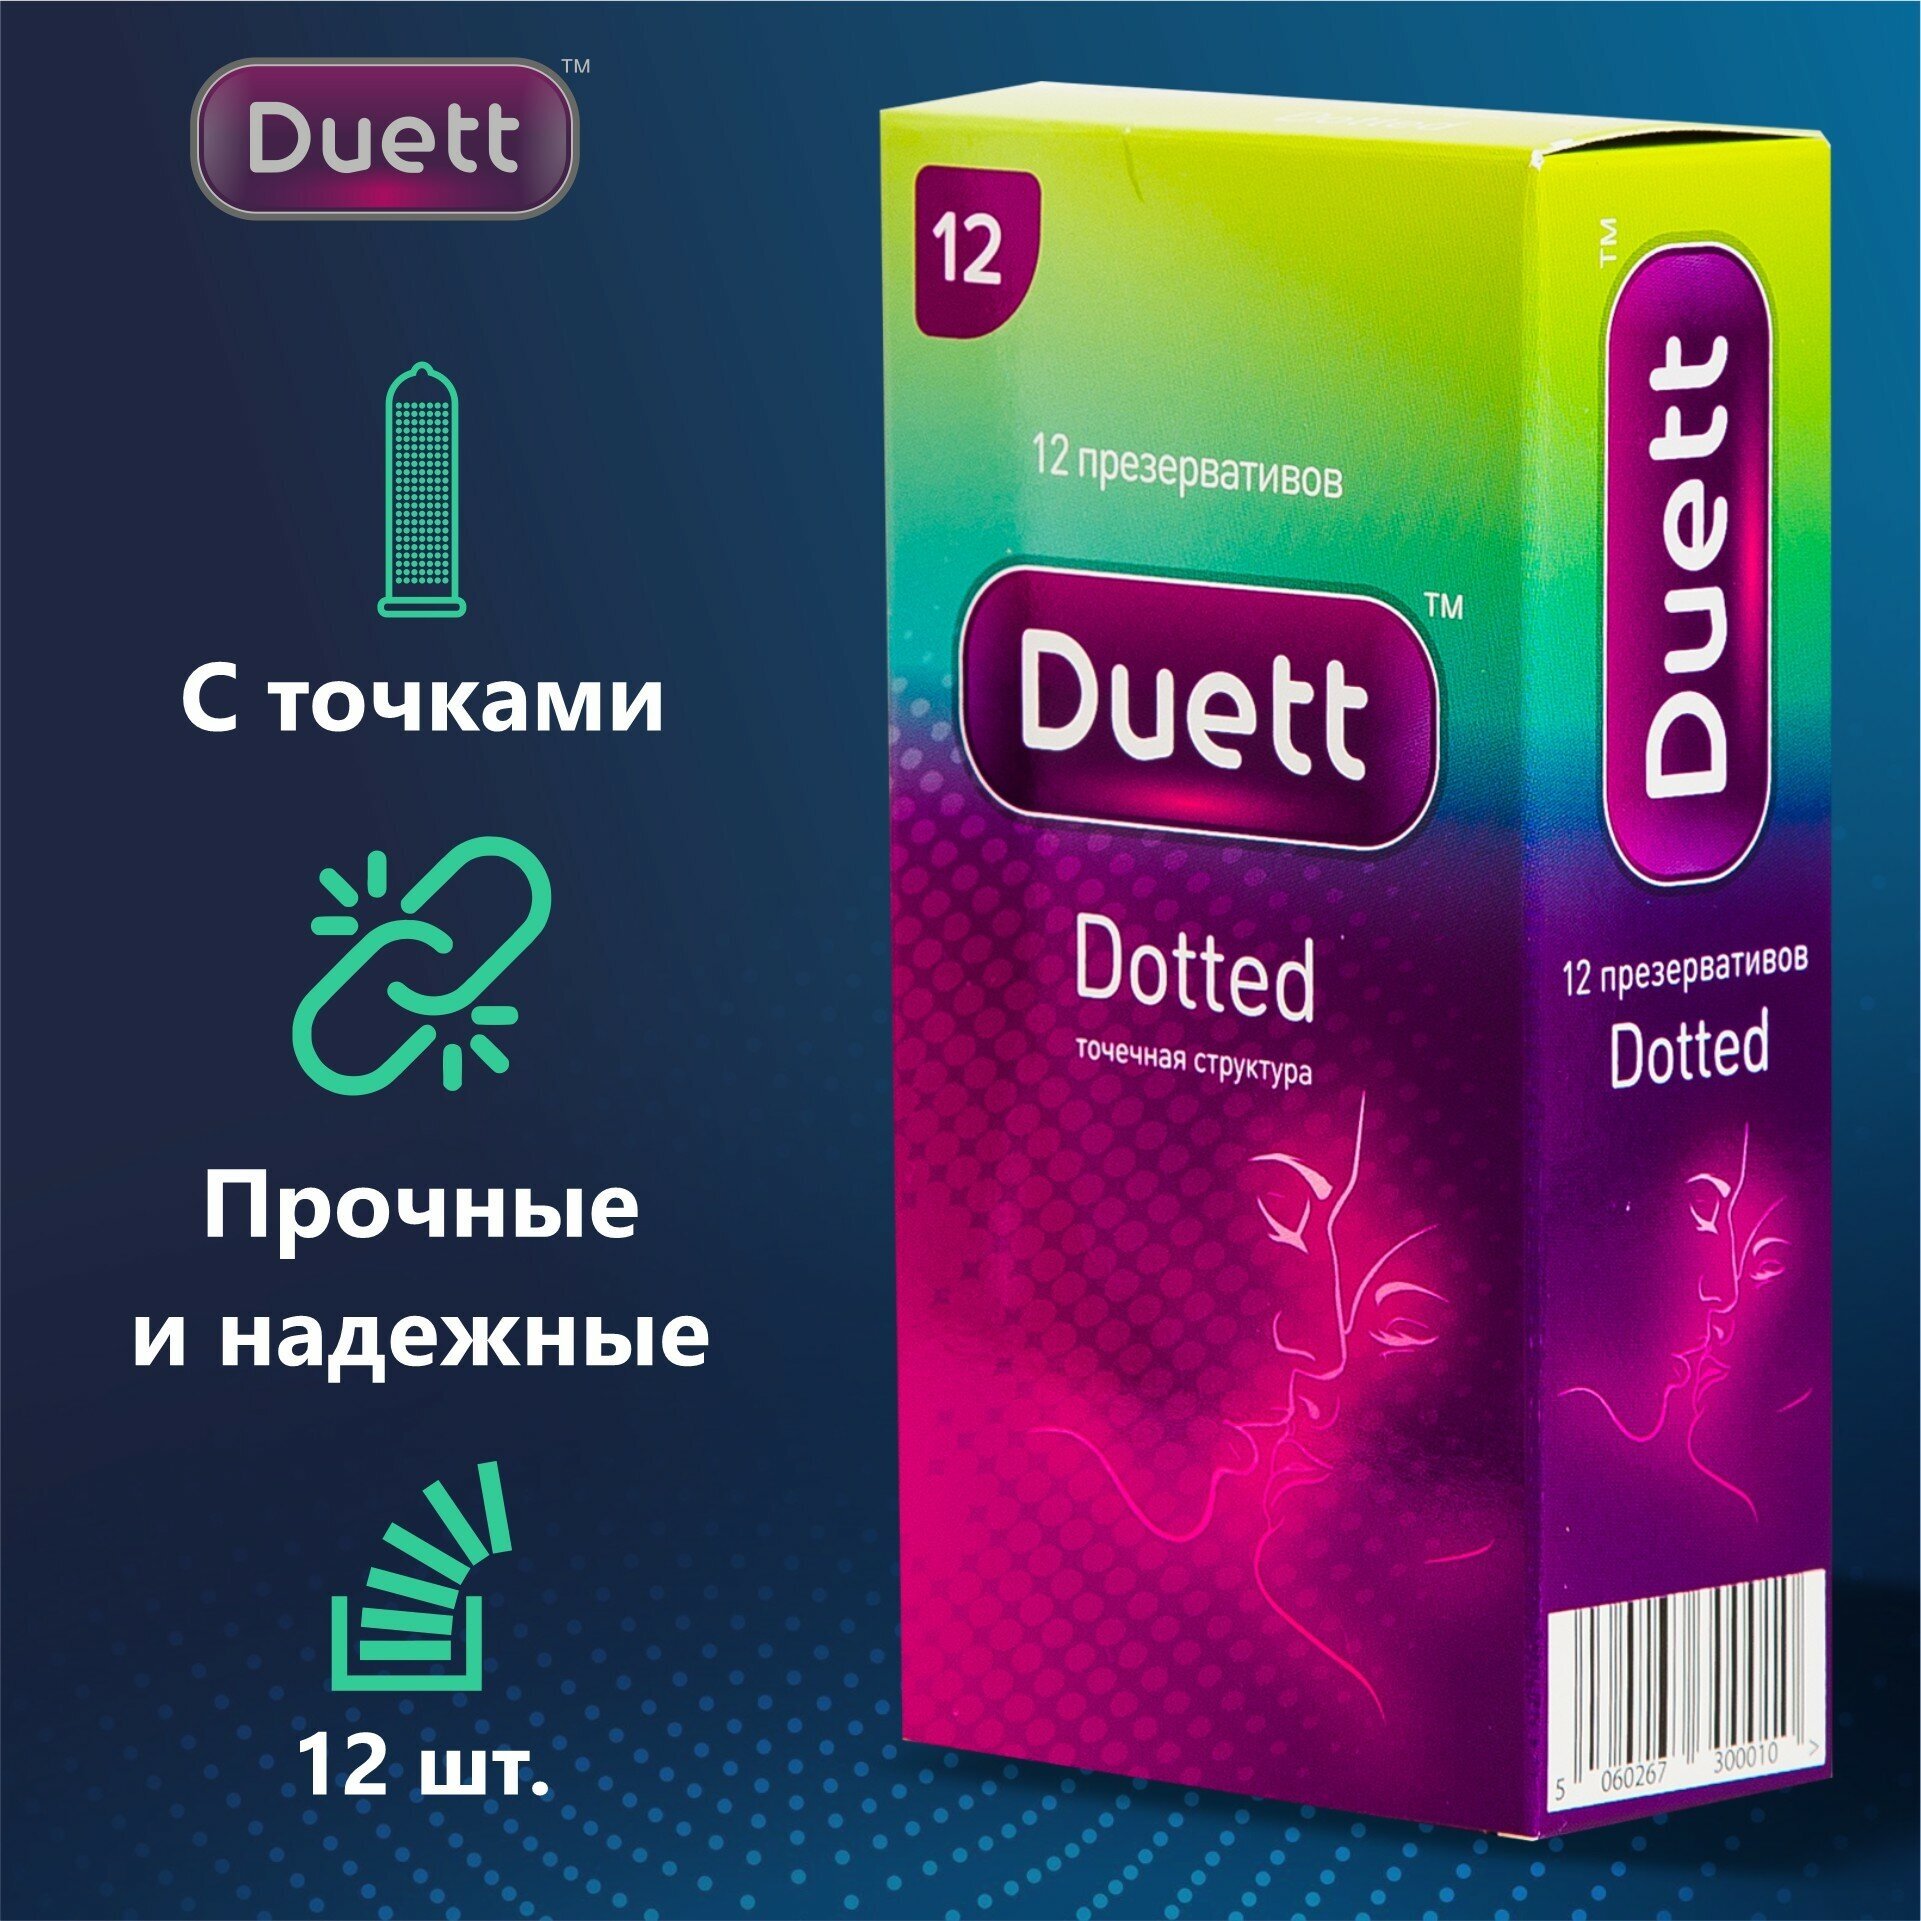 Презервативы DUETT dotted №12